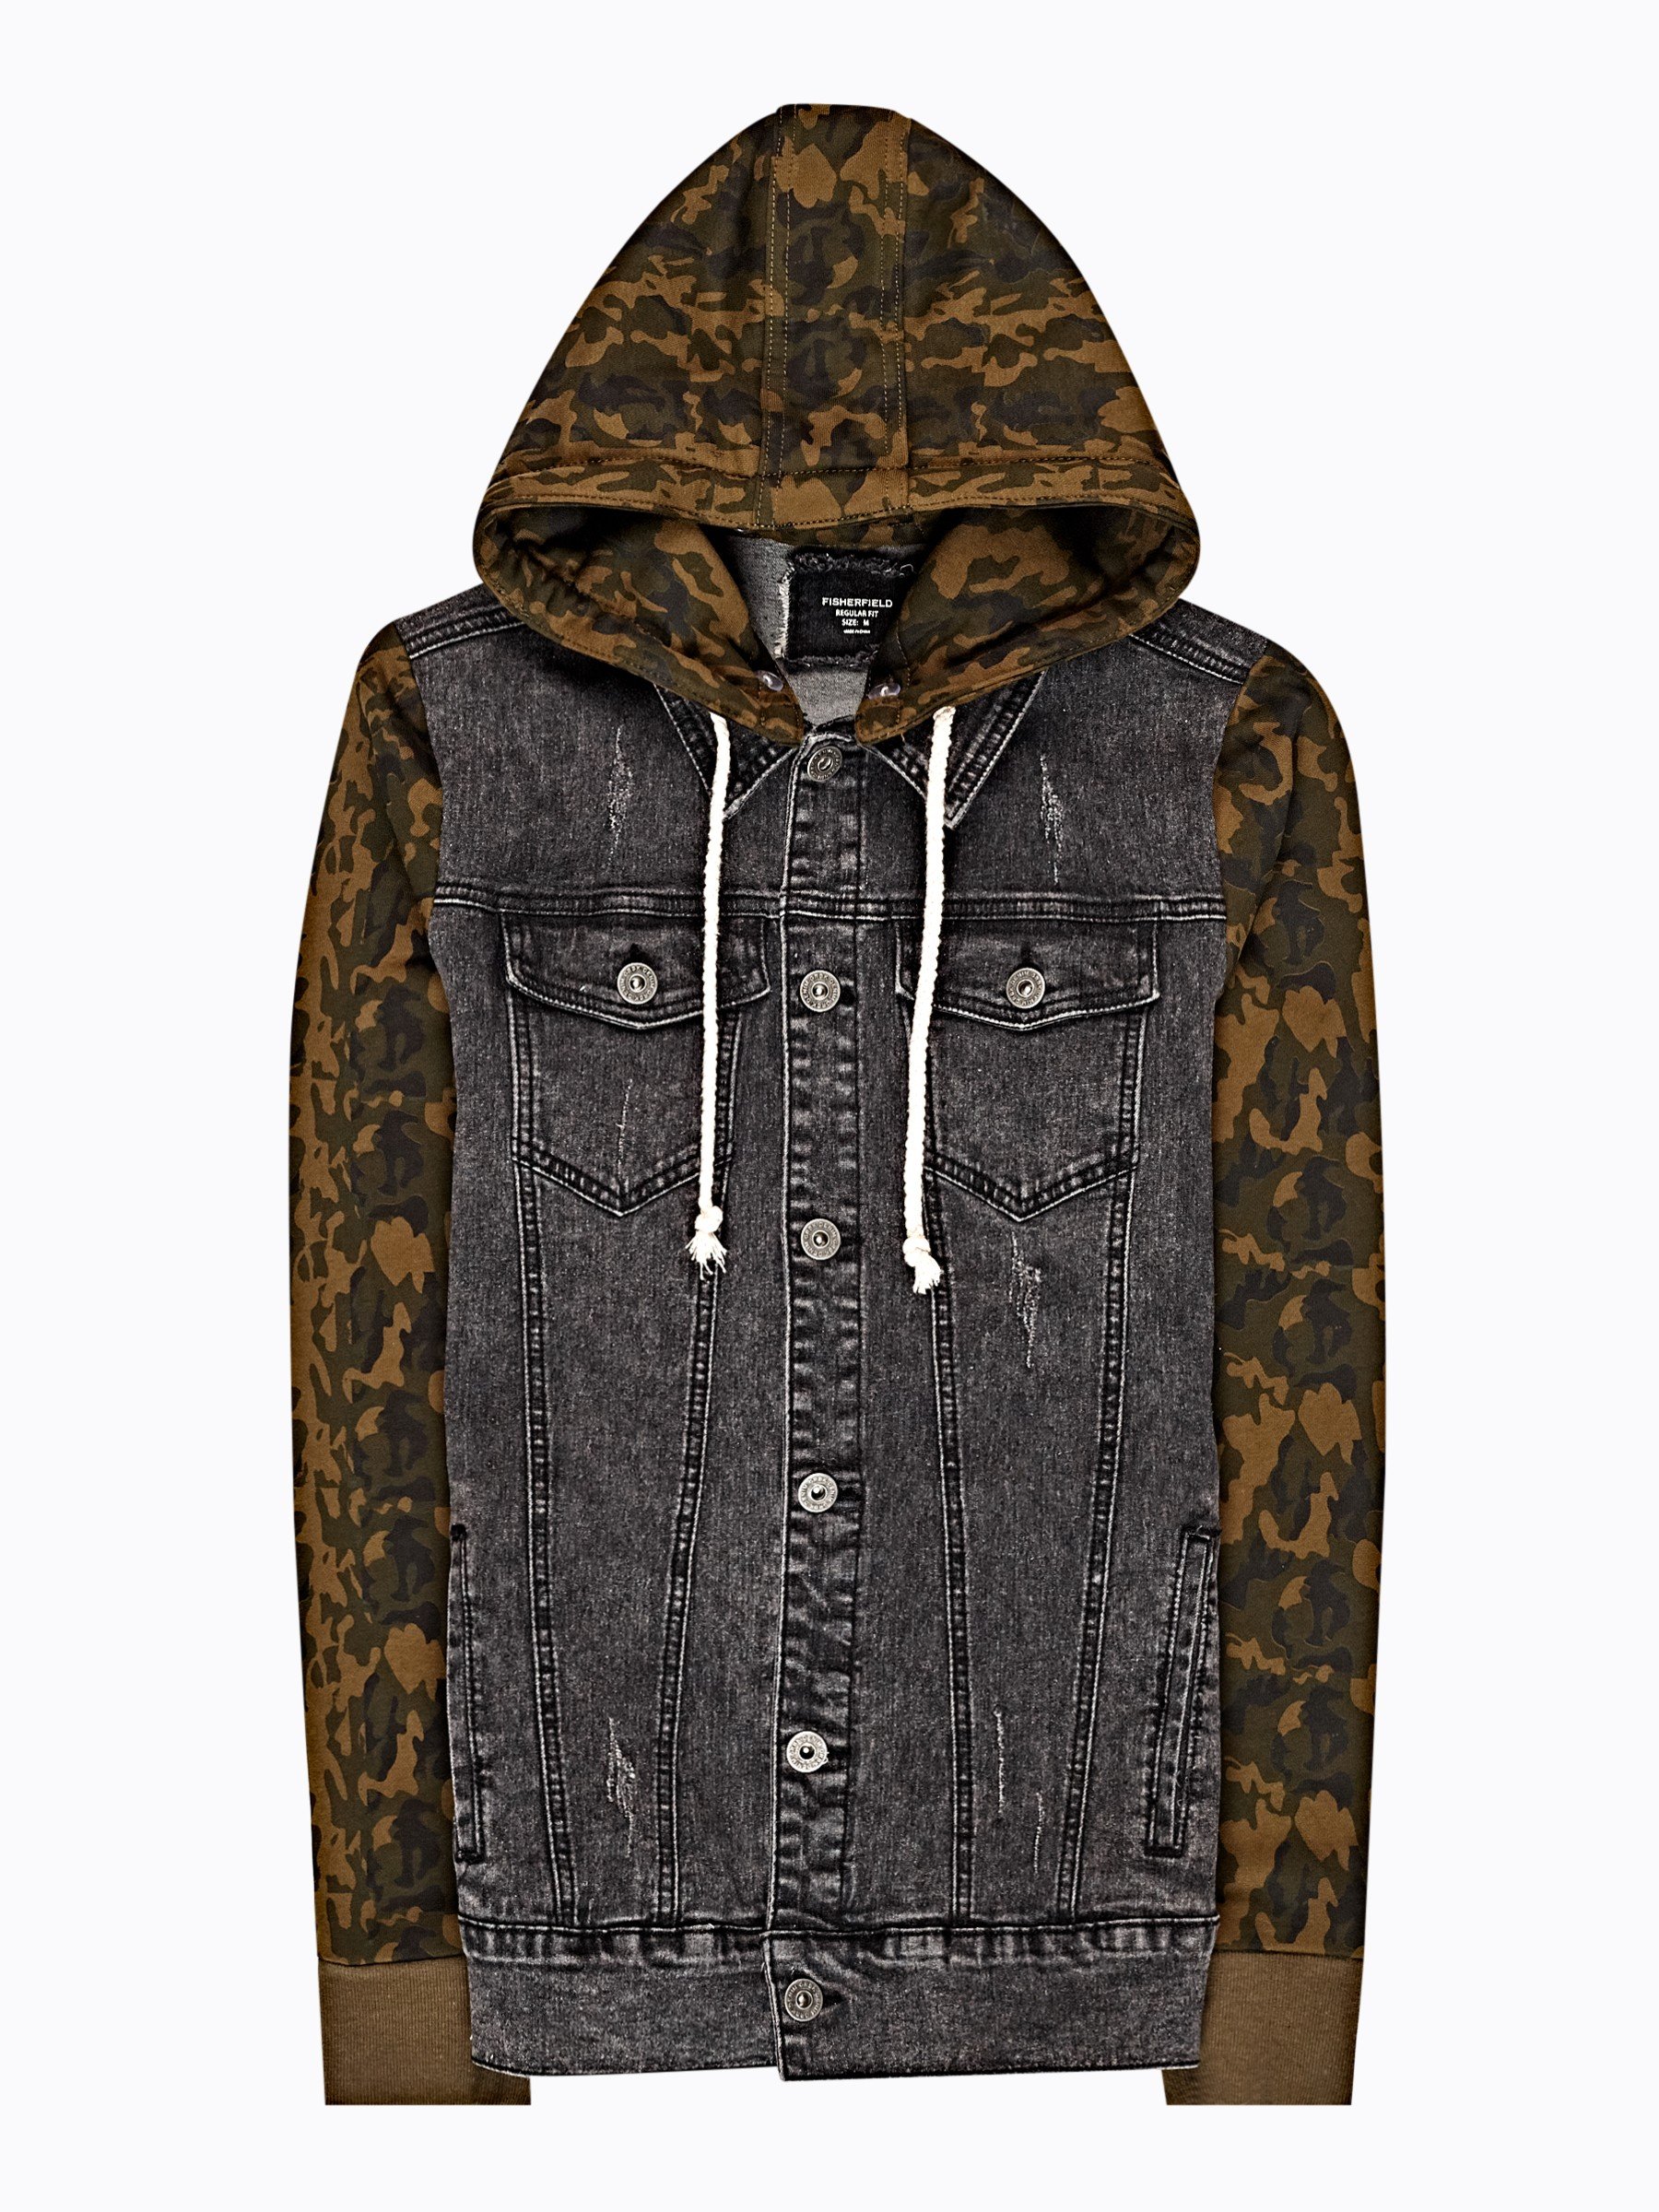 Denim jacket with camo print hood and 